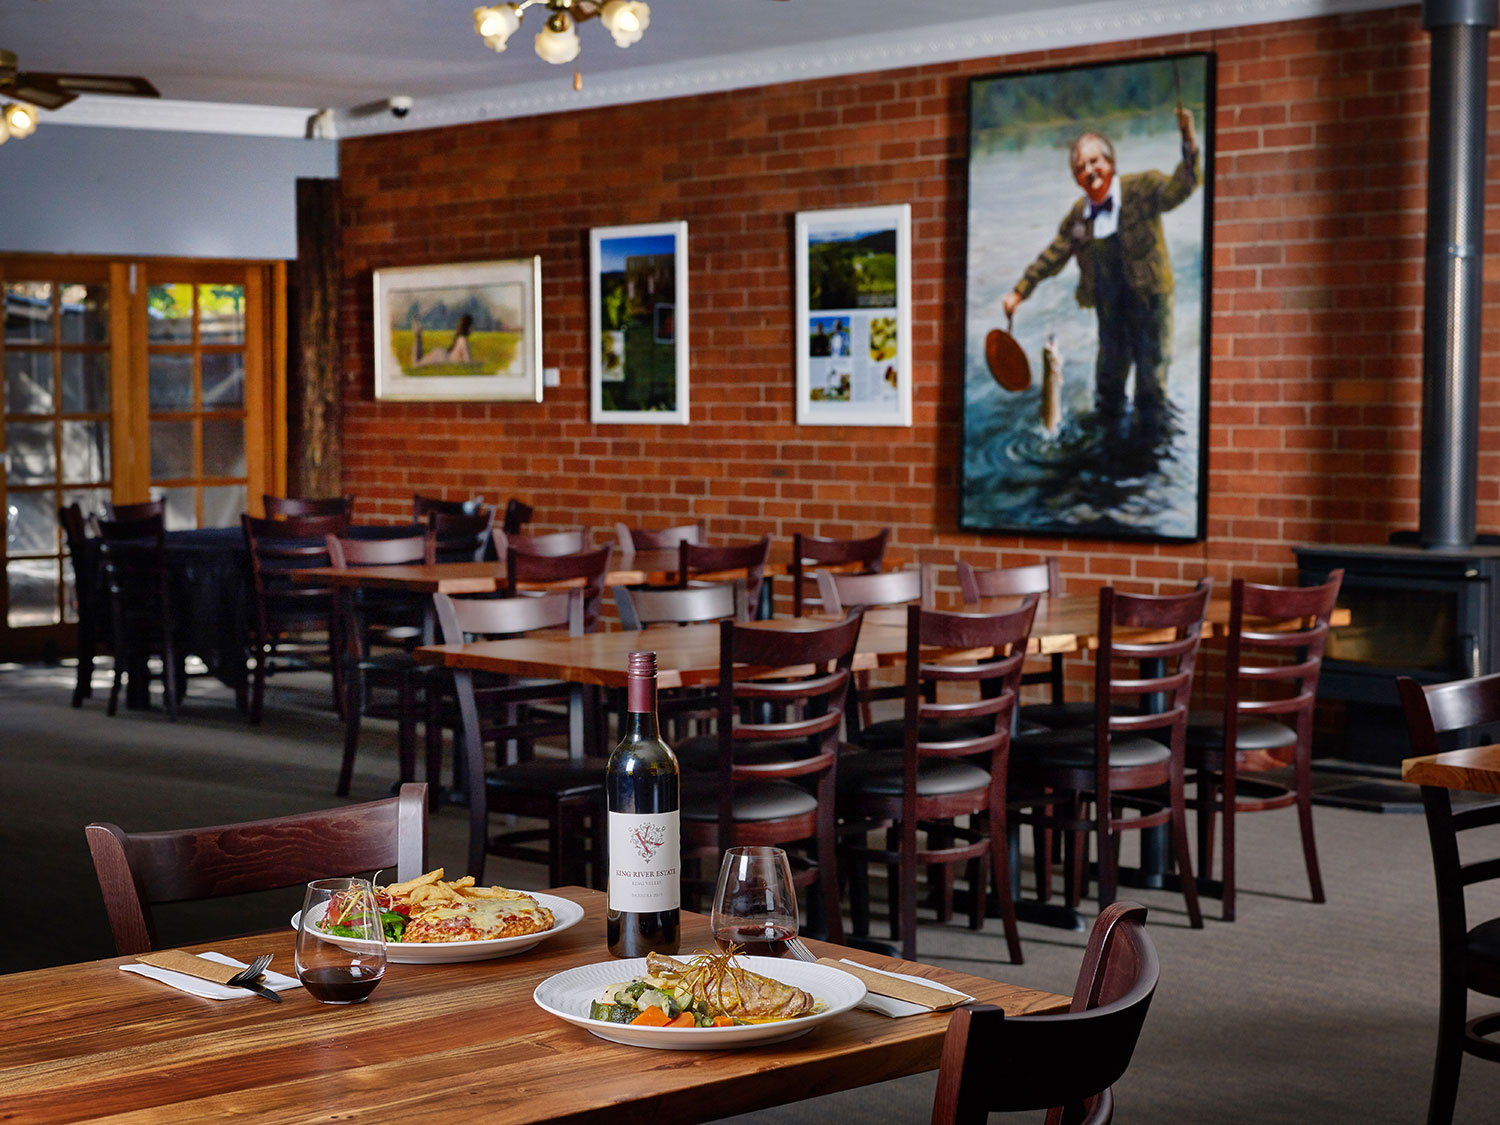 A portrait of Australian chef Tony Bilson hangs in the main dining room